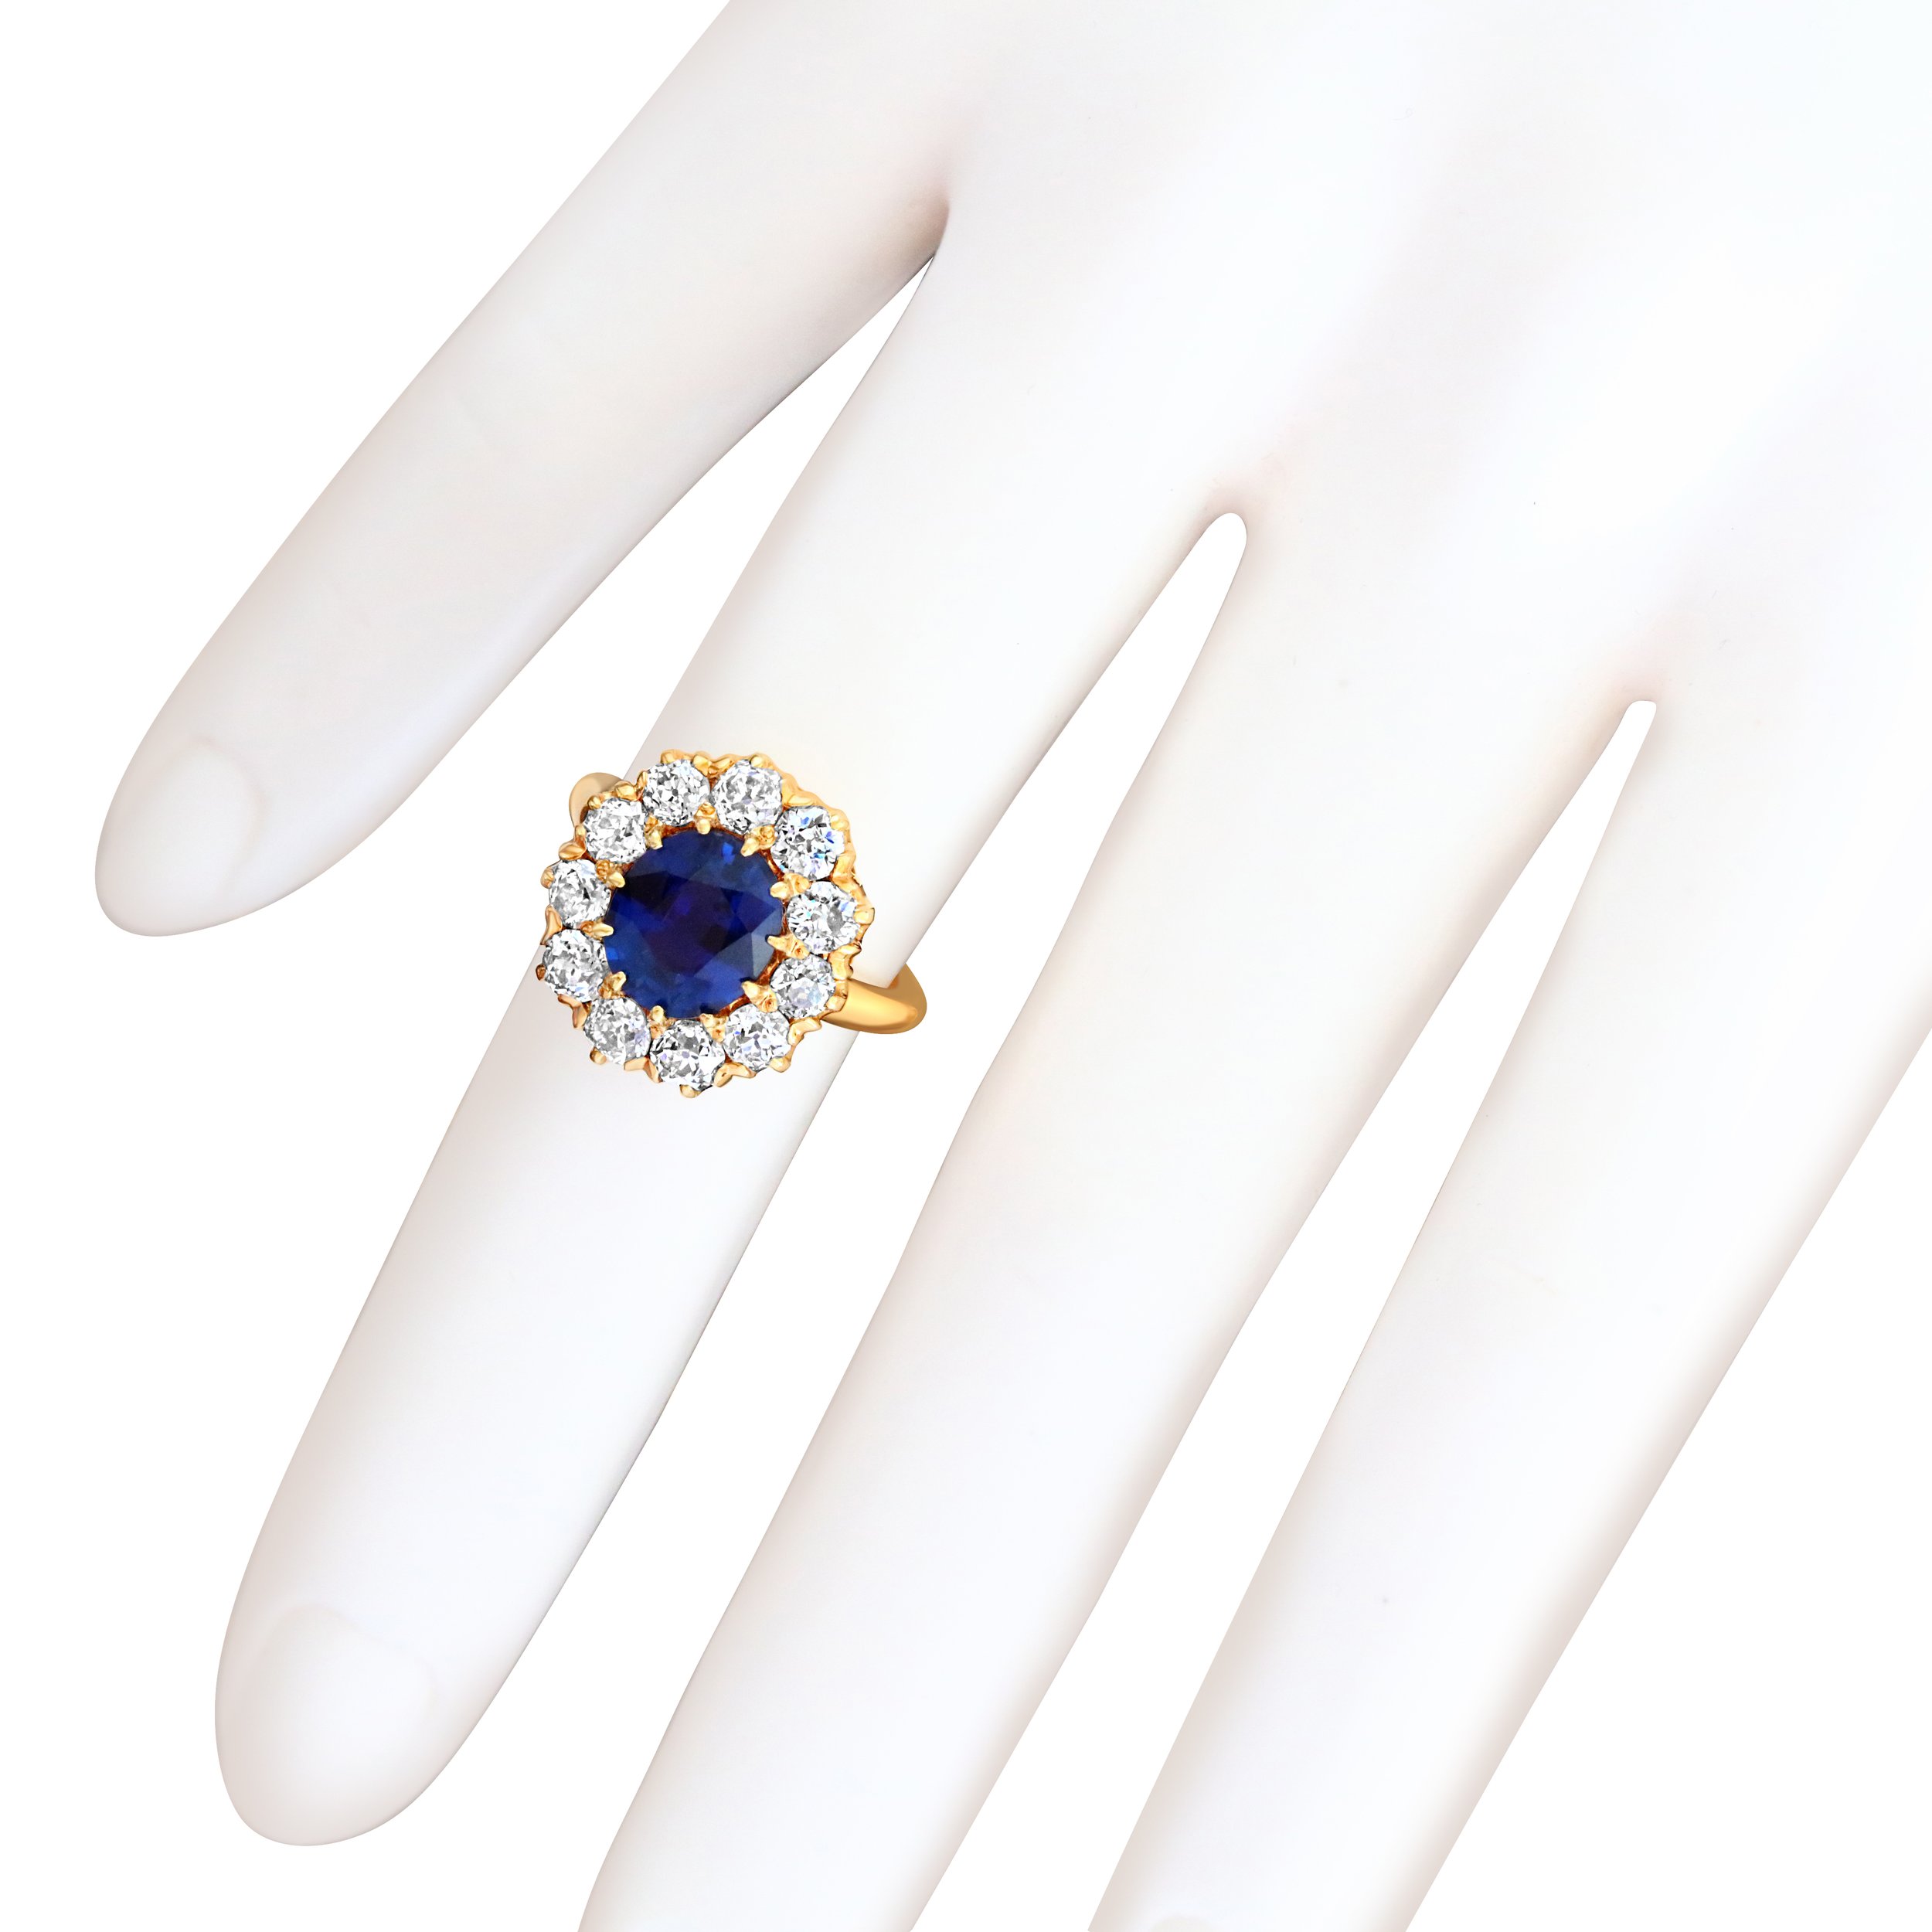 E 2.60 Burma Sapphire Ring.jpg